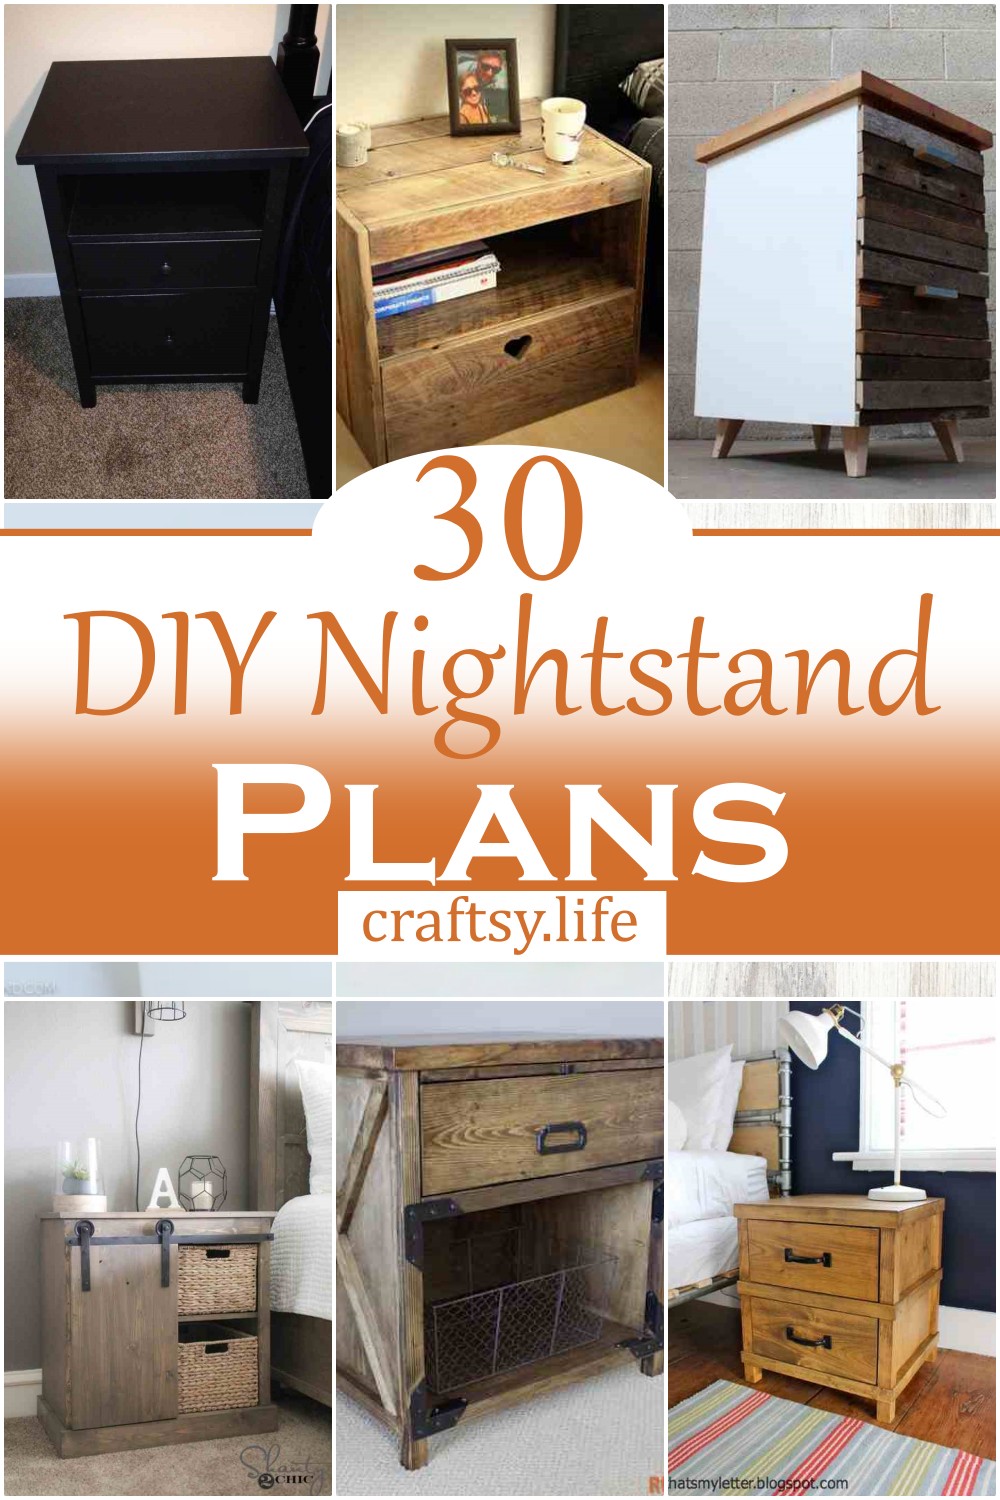 DIY Nightstand Plans